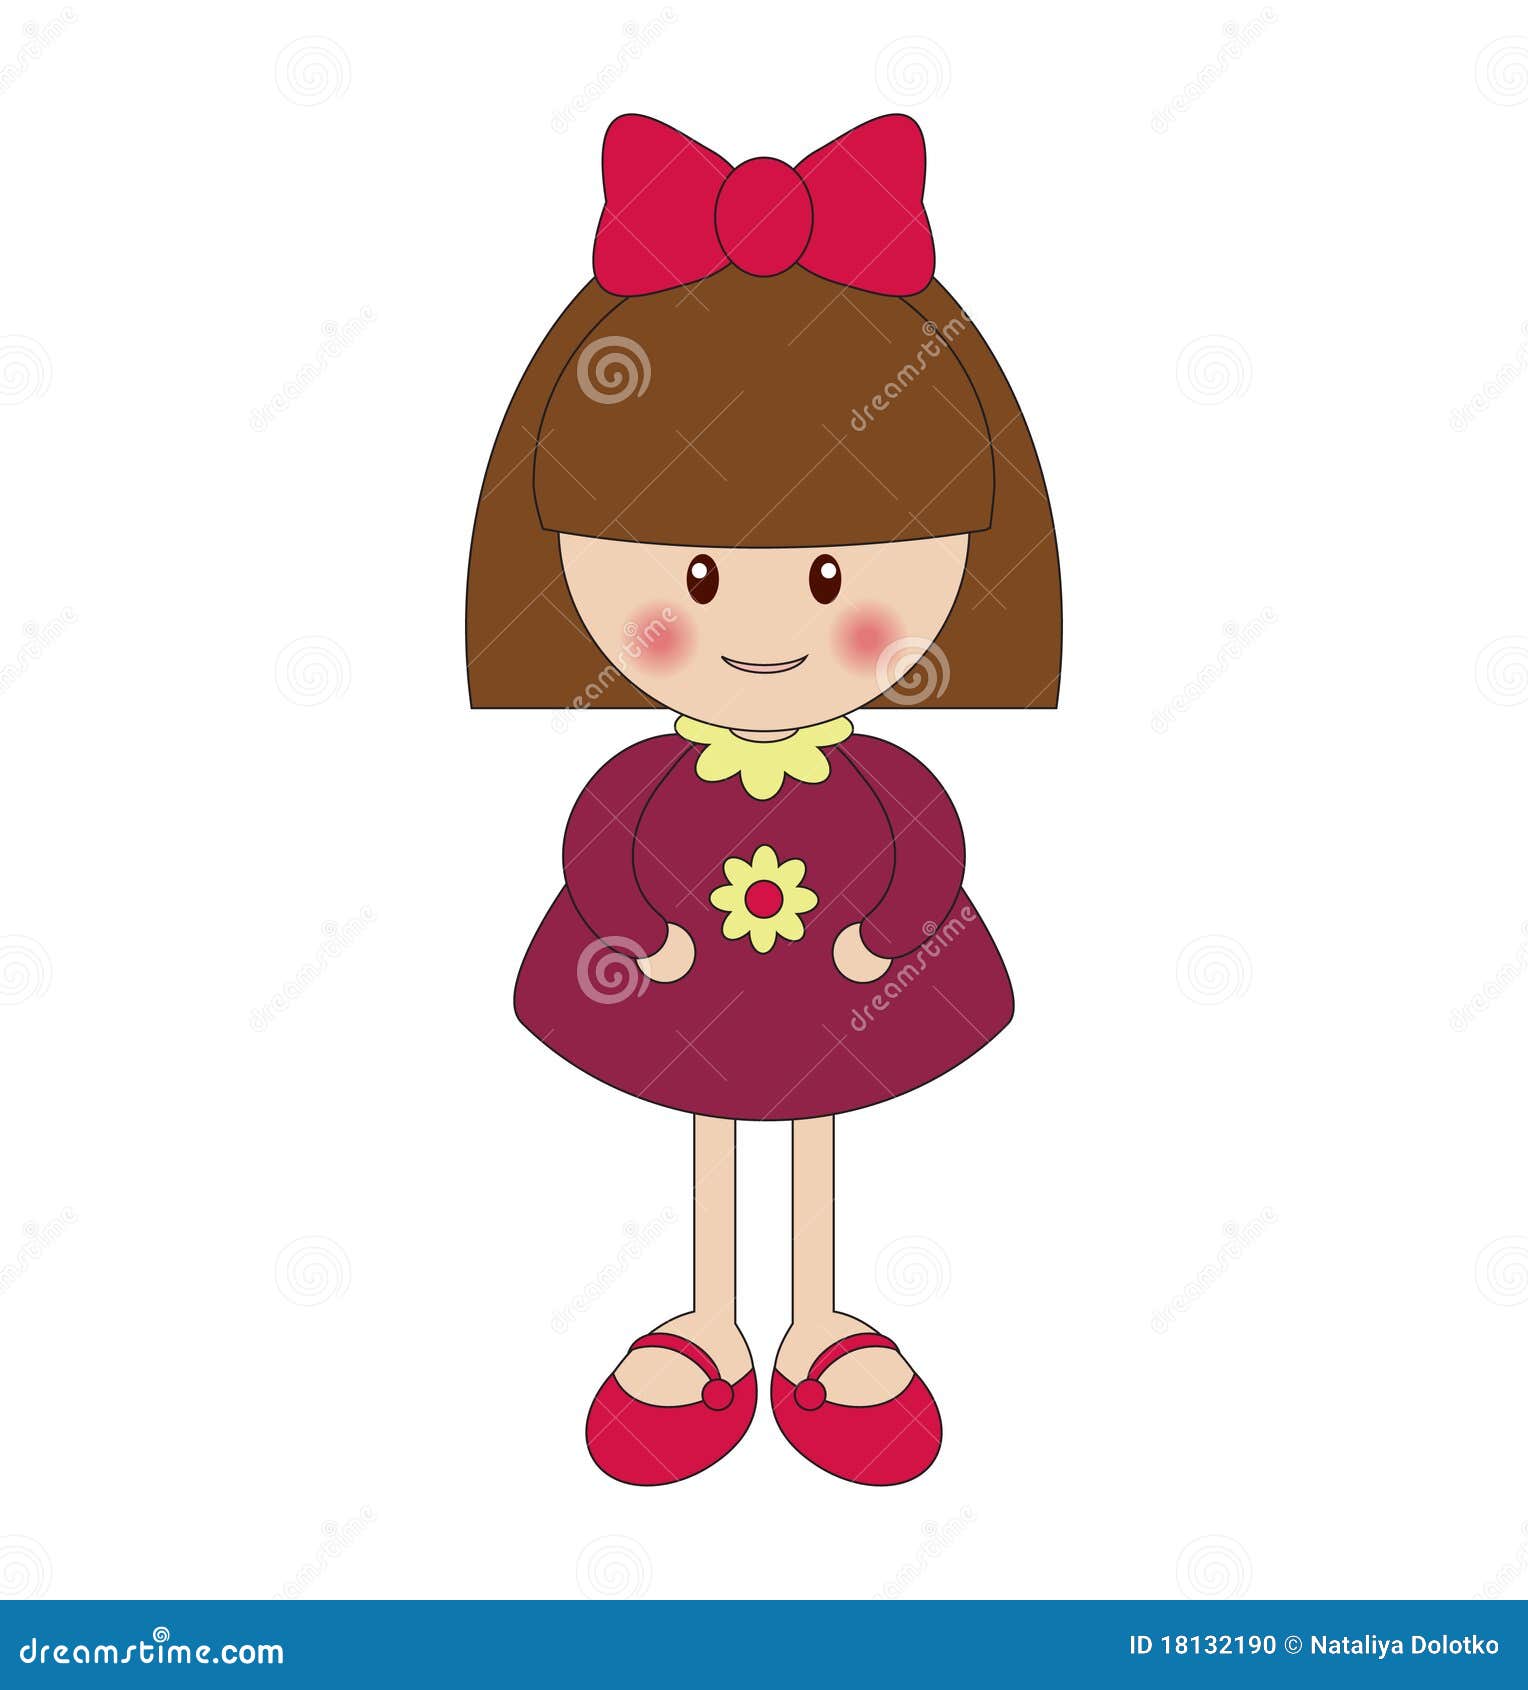 Cute little girl stock vector. Illustration of creative - 18132190